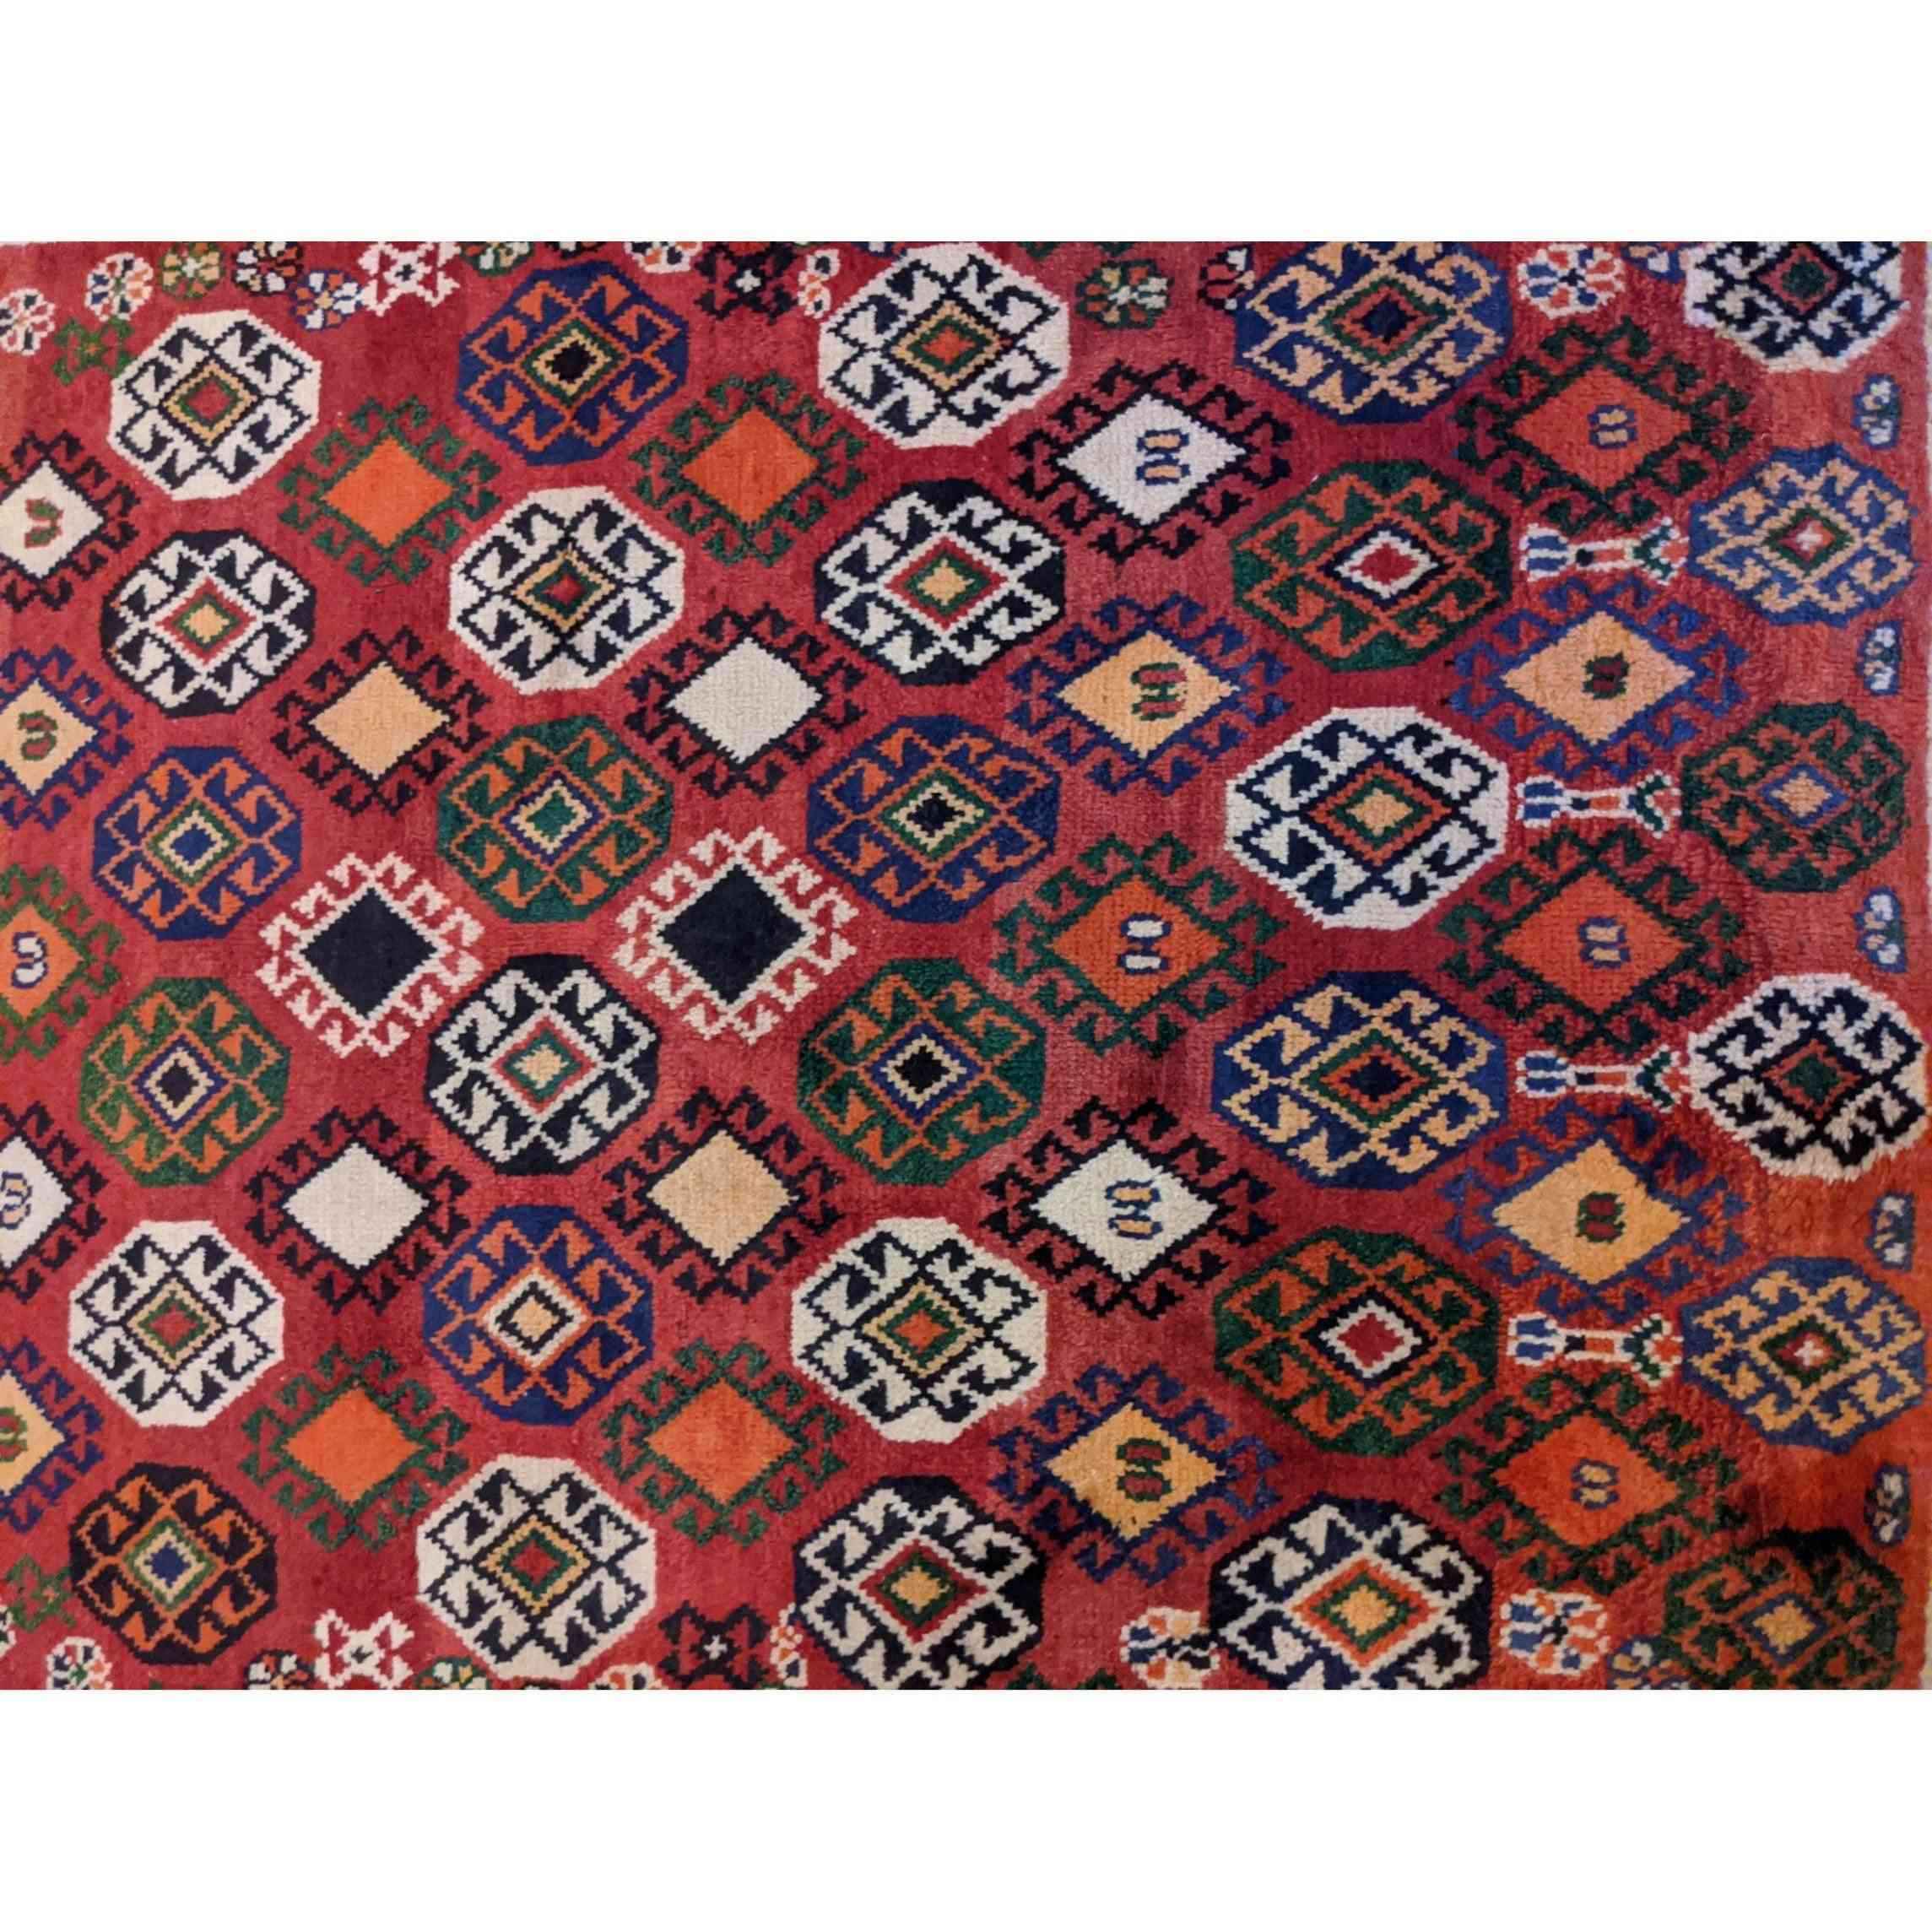 178 x 117 cm Qashqai Persian Tribal Red Rug - Rugmaster